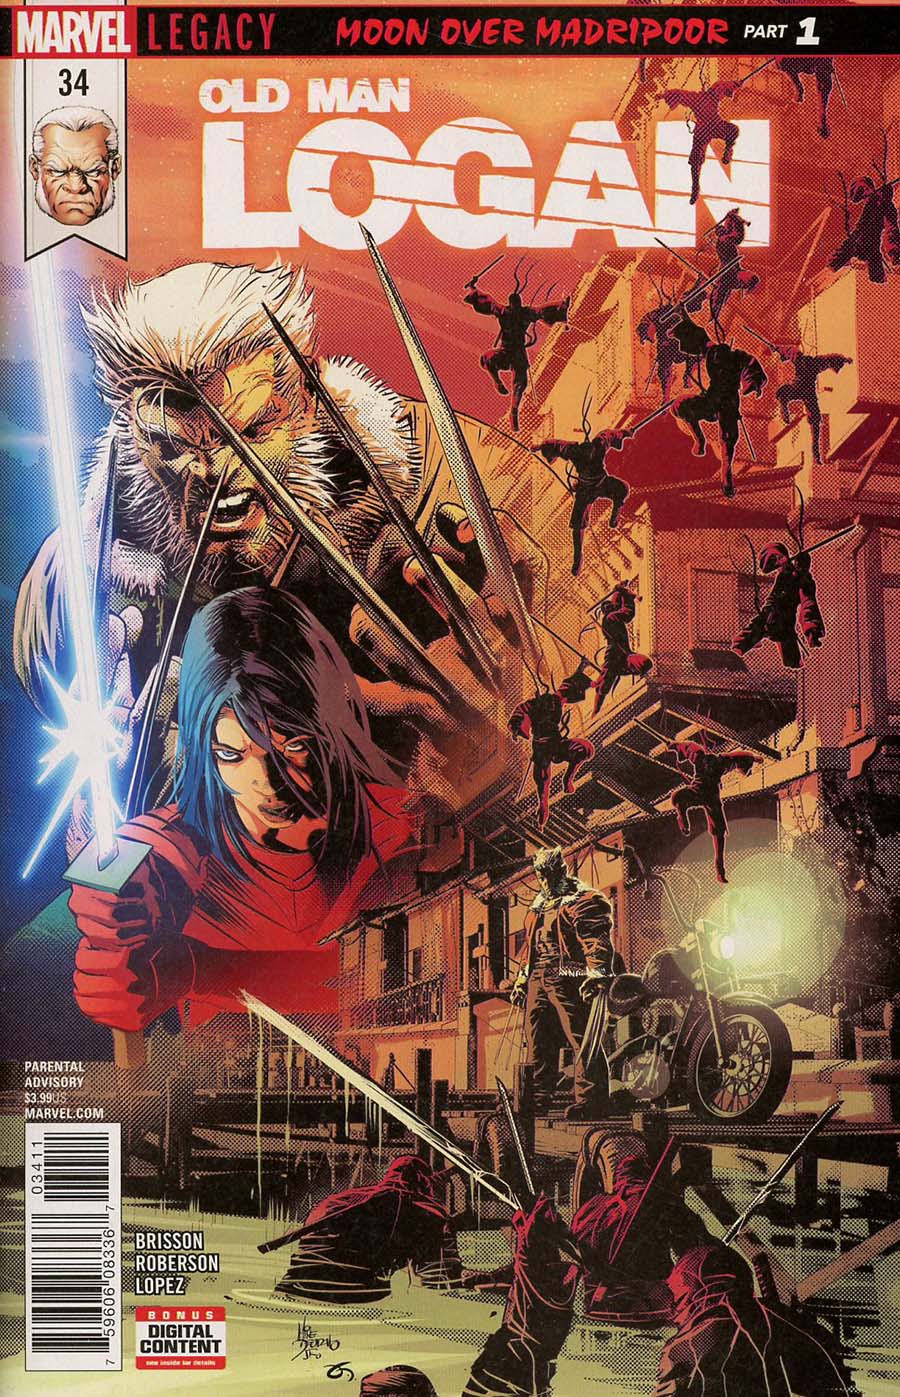 Old Man Logan Vol 2 #34 (Marvel Legacy Tie-In)